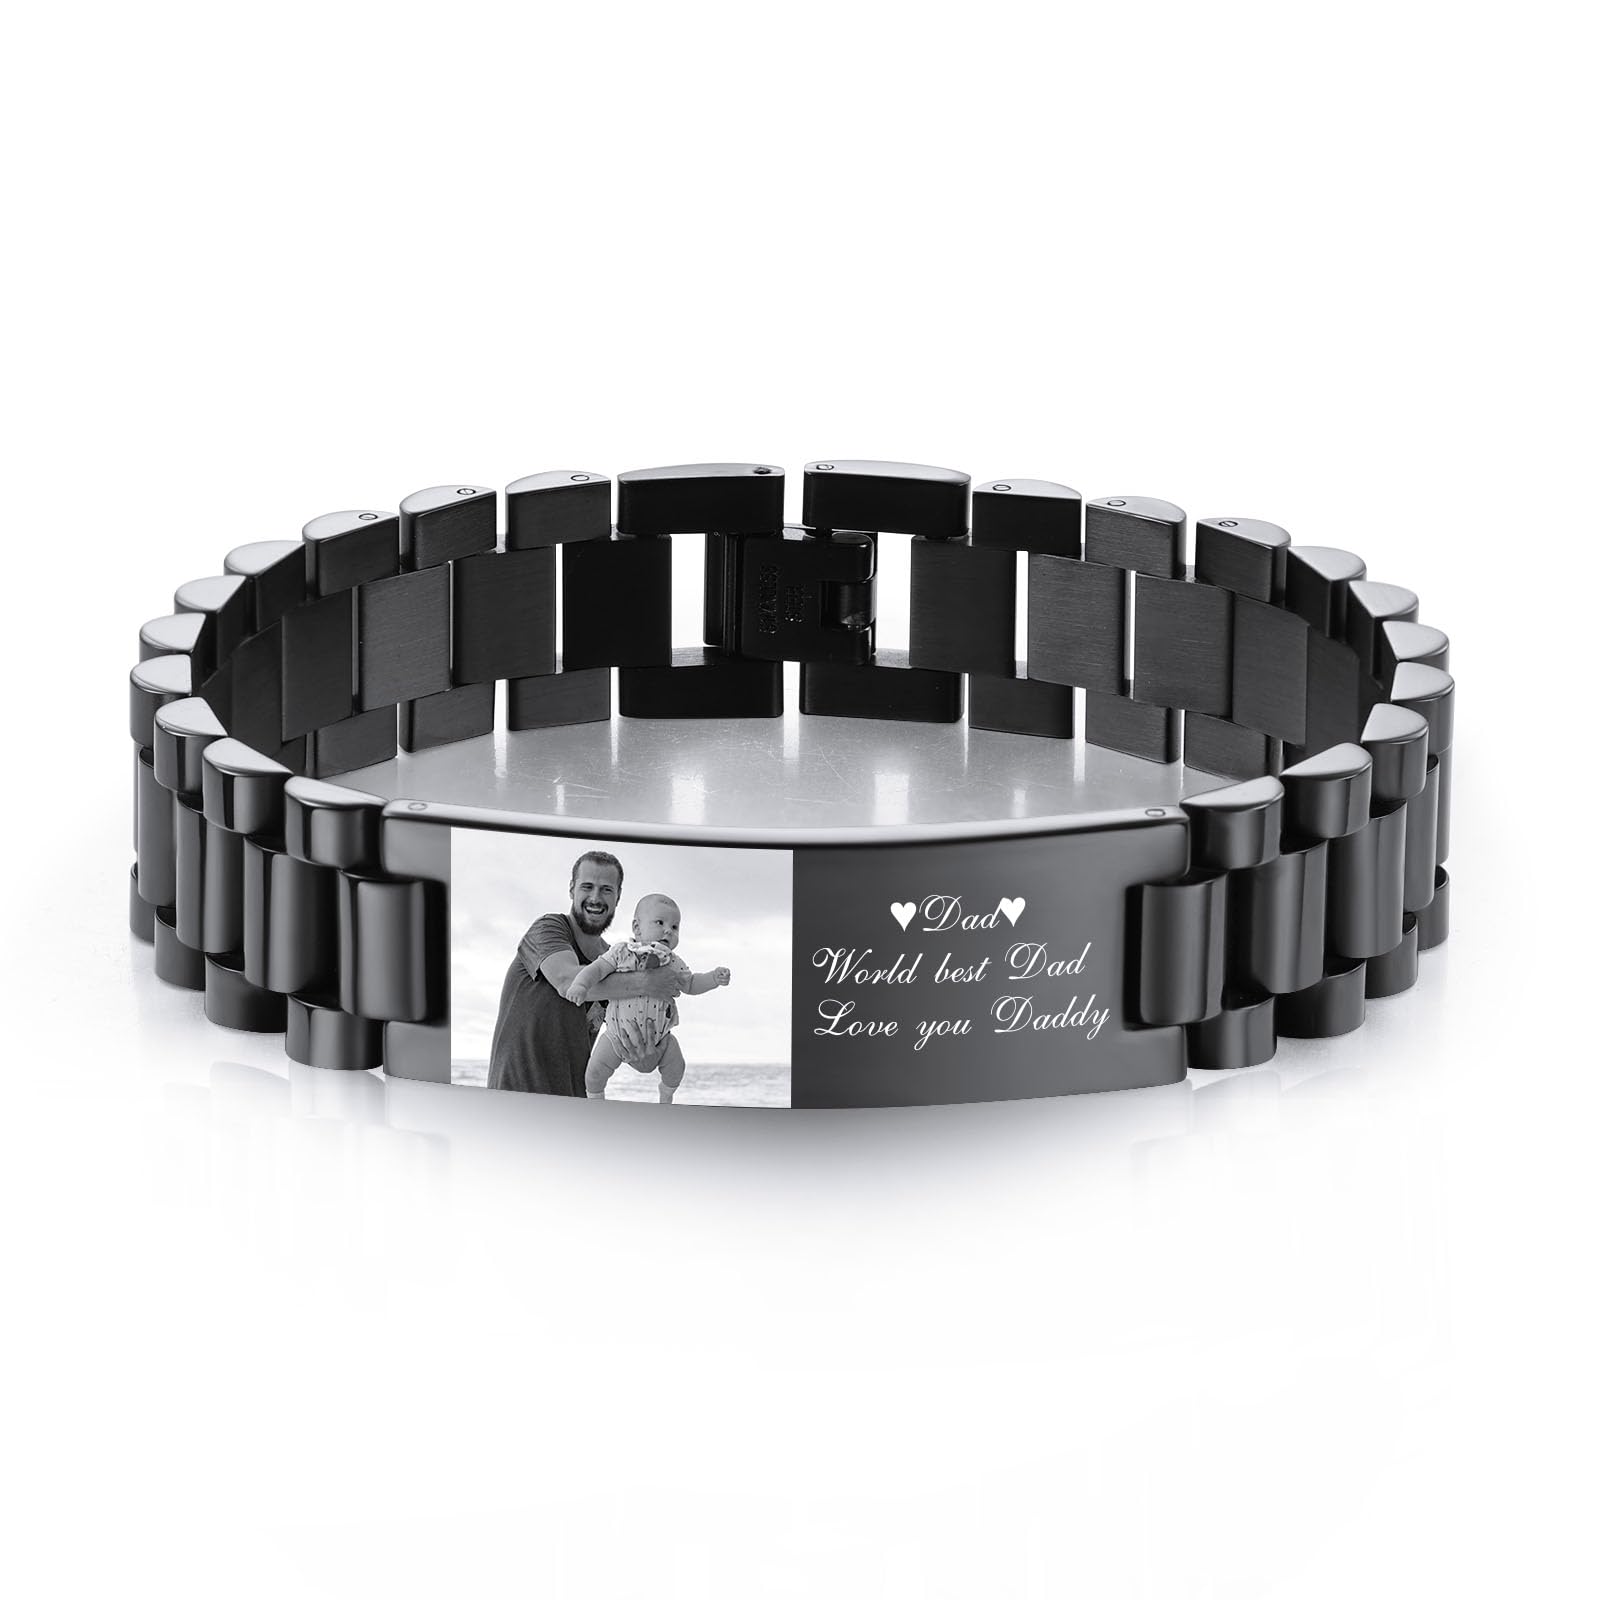 INBLUE Personalized Bracelet for Dad Men - Engraved Names Text Photo Men's Link Bracelet Gift for Birthday Anniversary Father Husband Grandpa Son Boyfriend